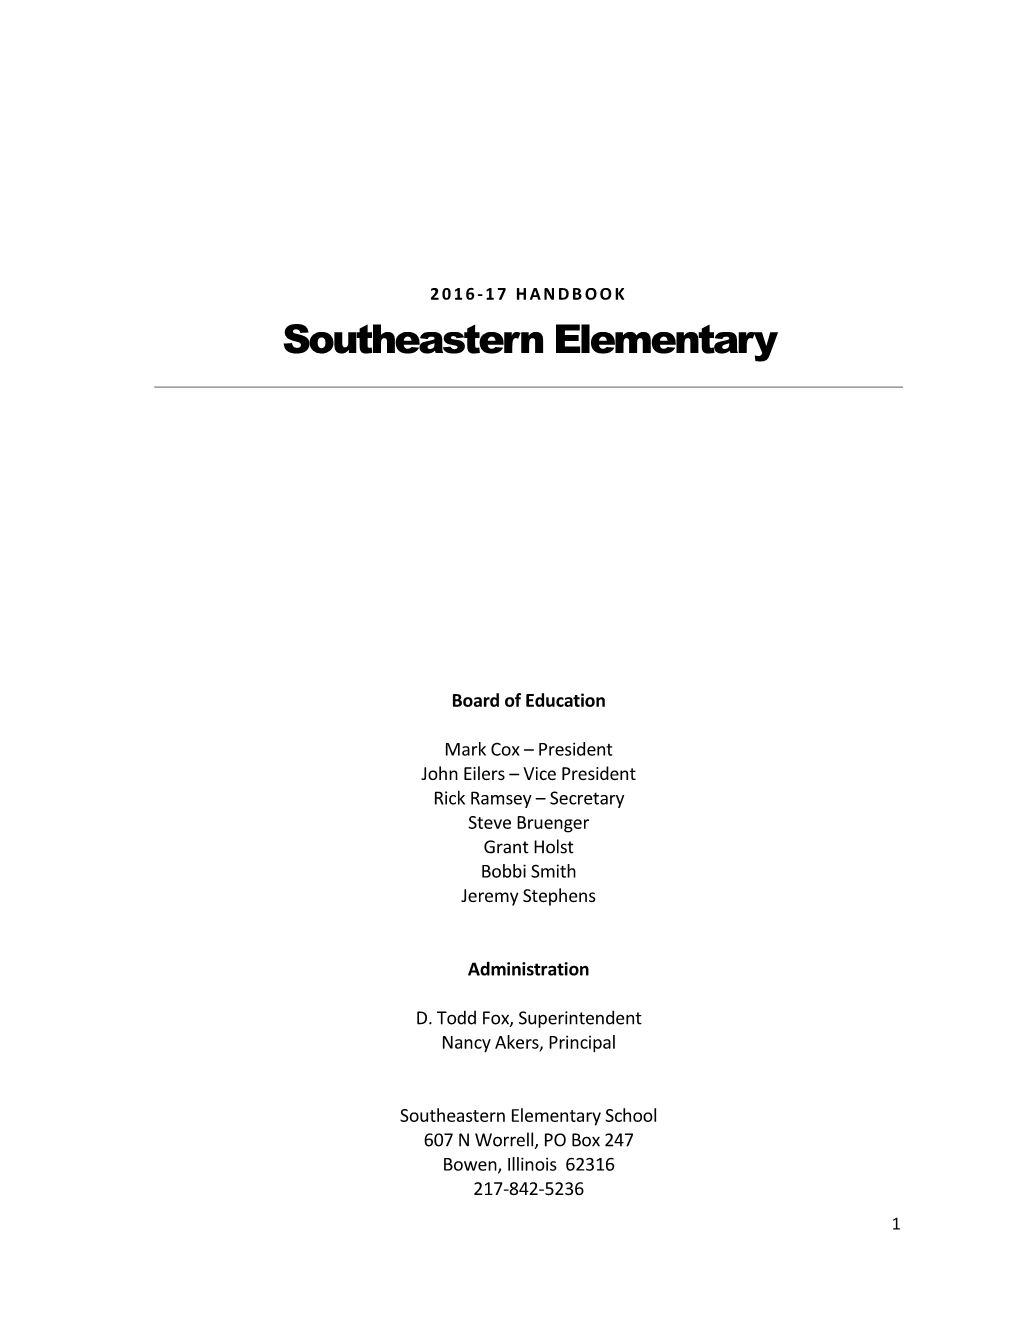 Southeastern Elementary